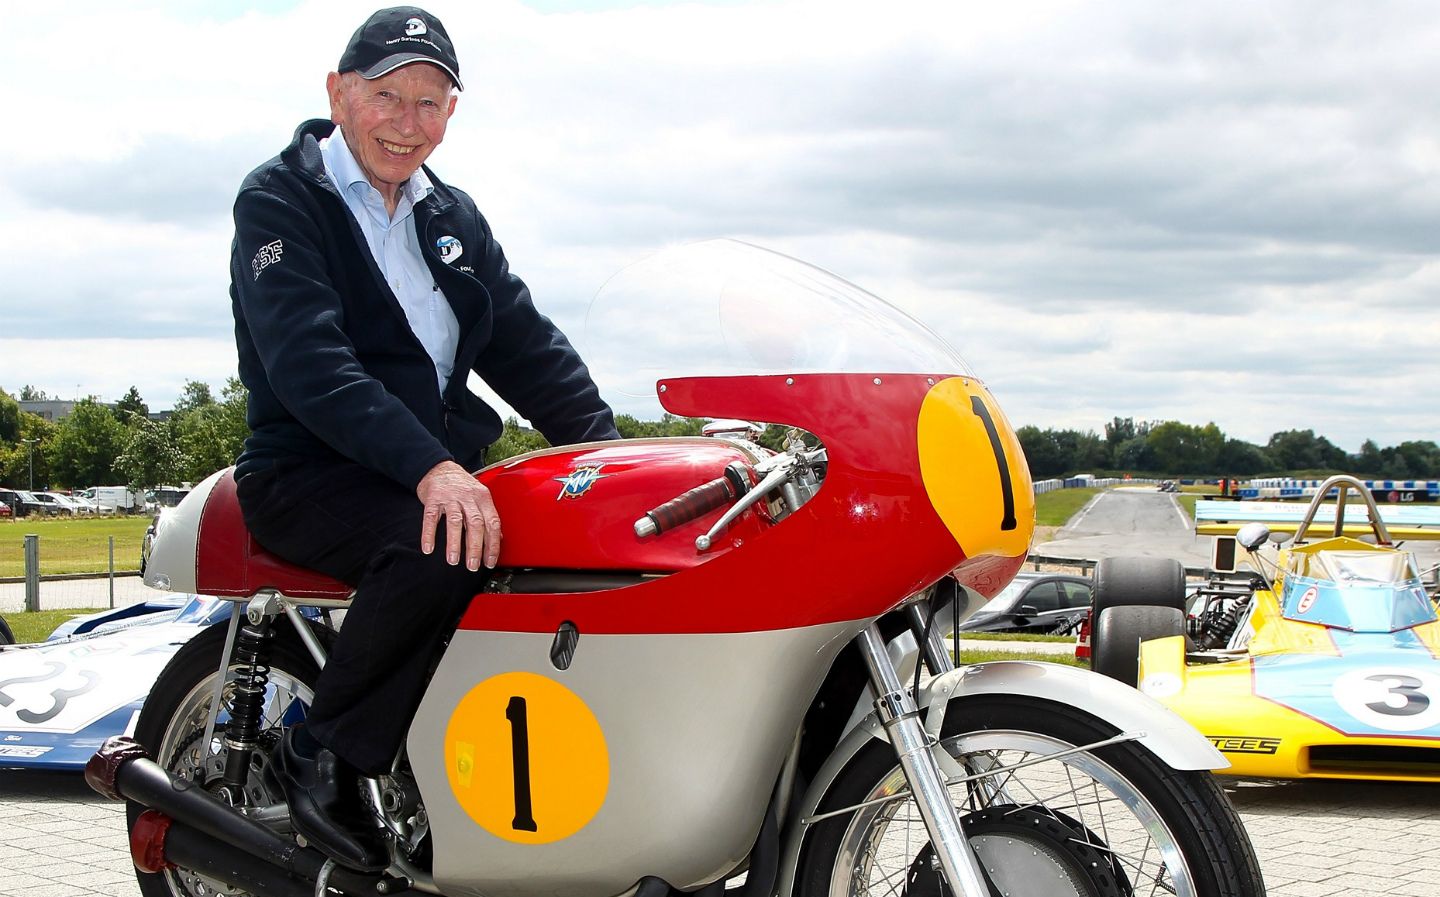 John Surtees F1 and motorcycle world champion